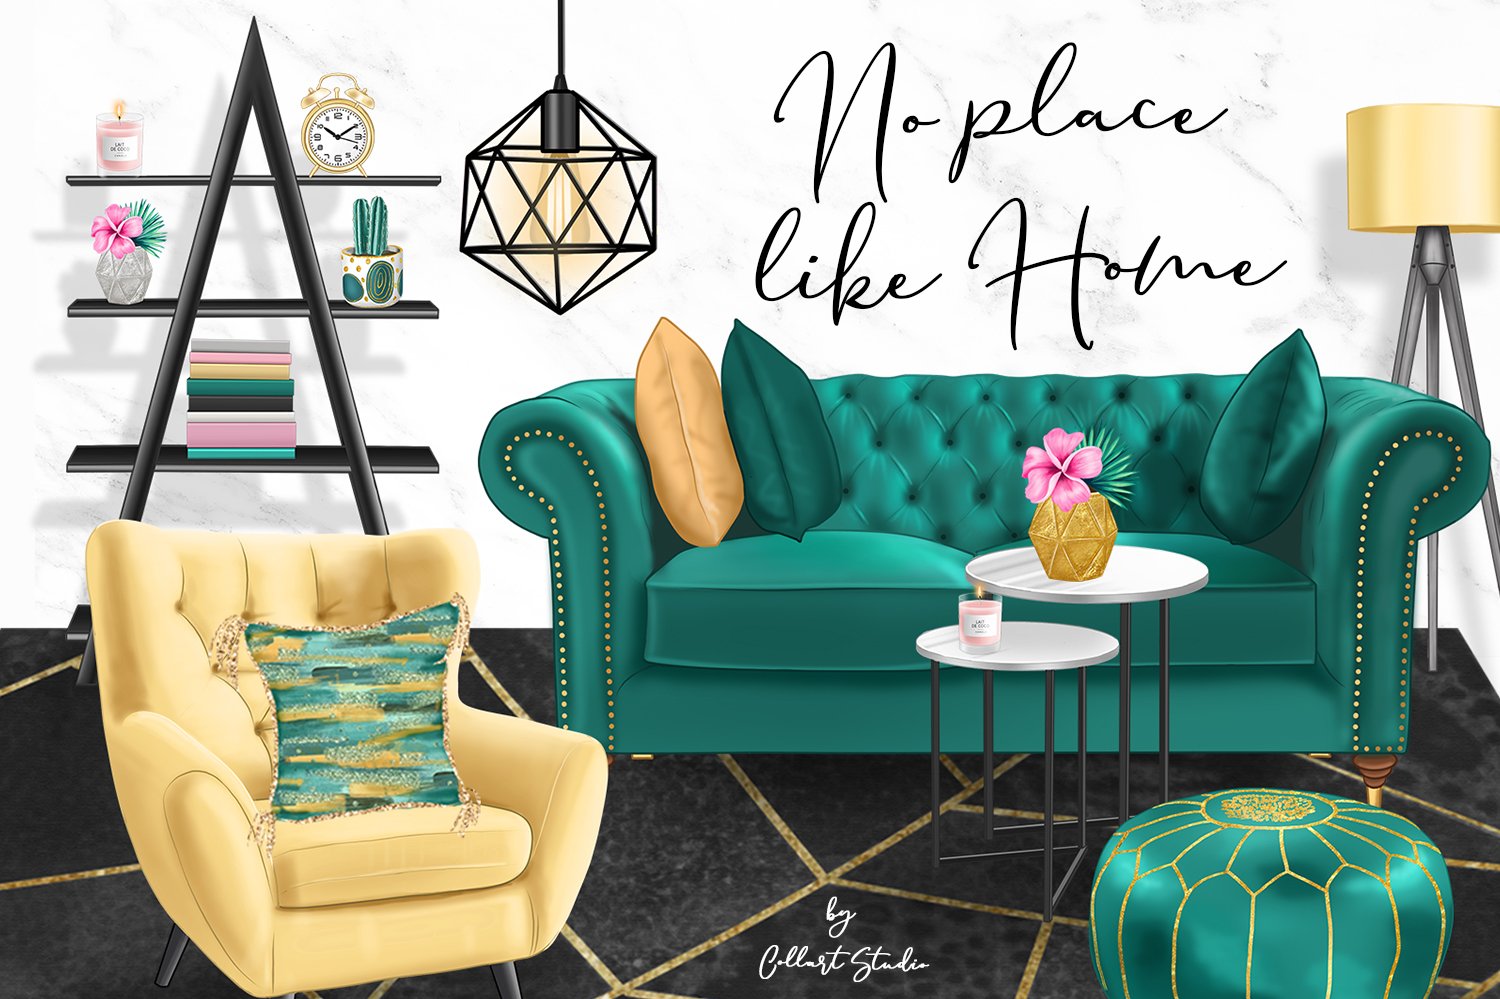 Home Clip Art, furniture design cover image.